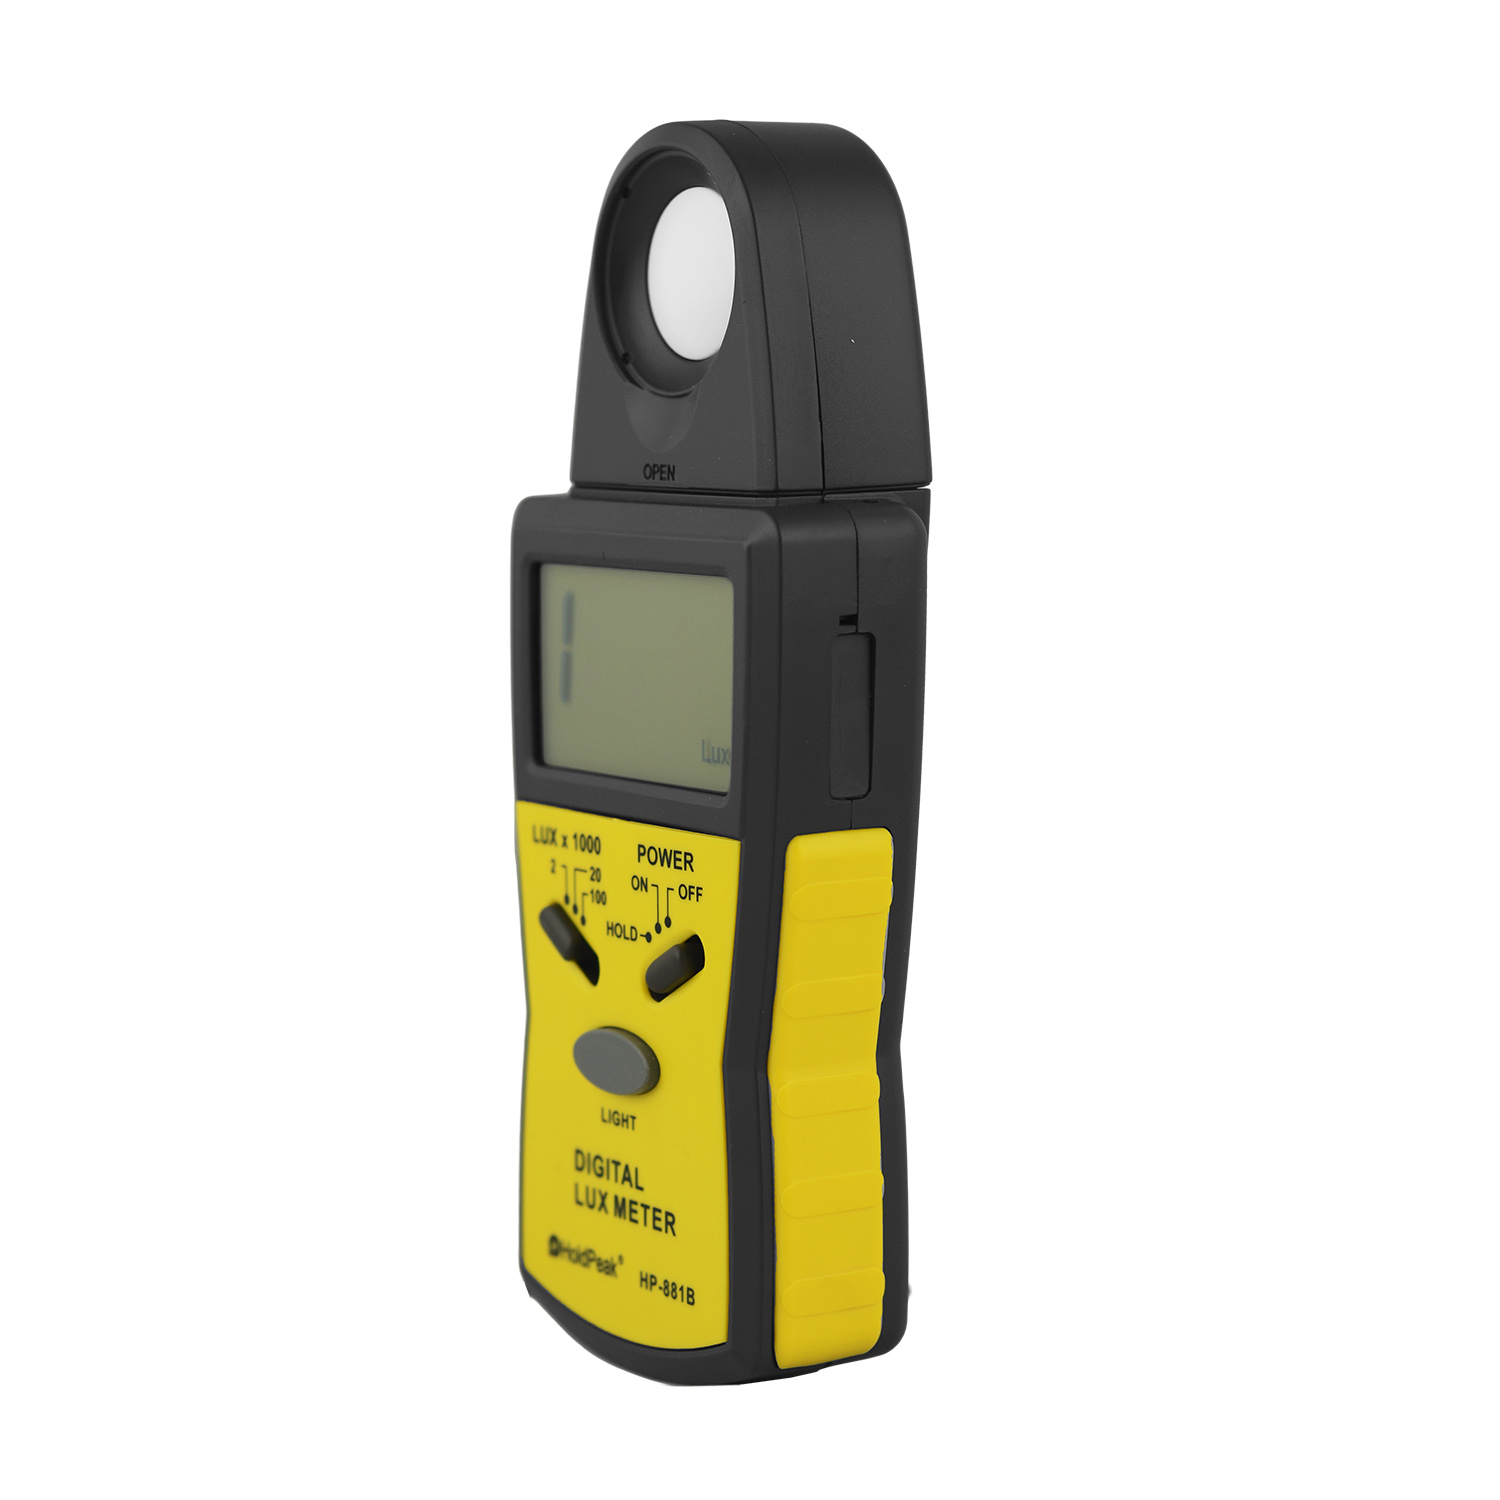 HoldPeak unique illuminance meter price Suppliers for testing